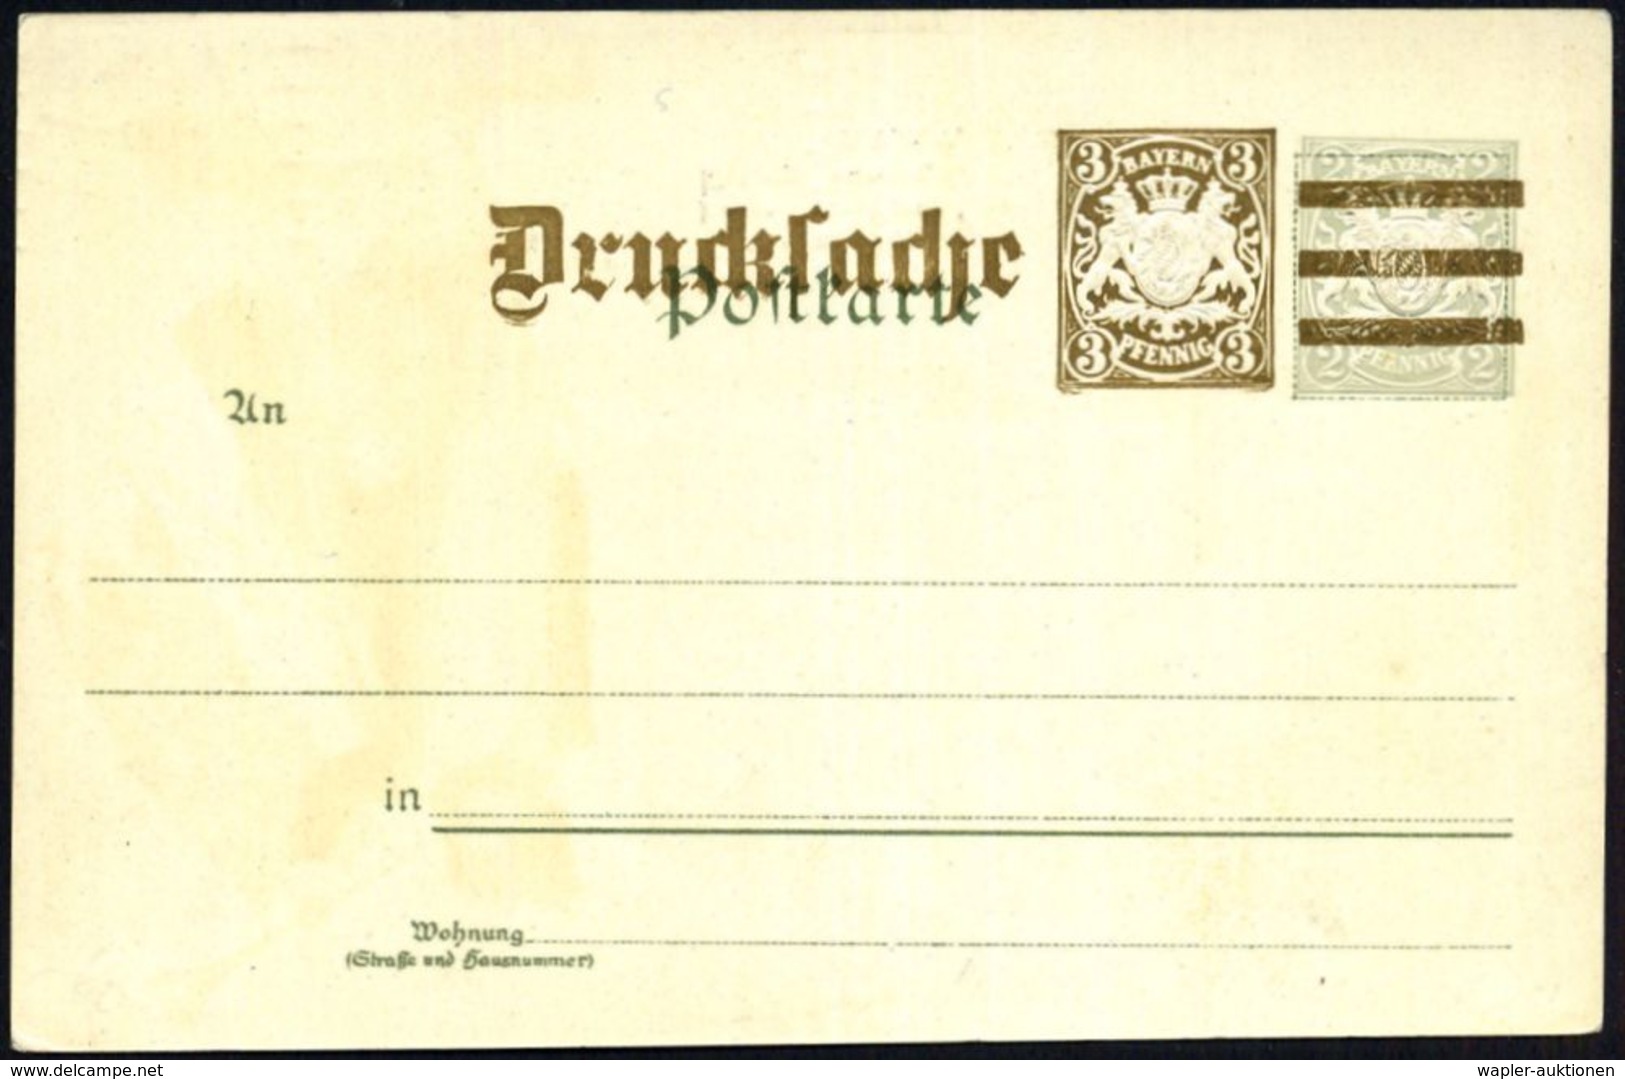 BAHNHOF / BAHNHOFS-POSTÄMTER : München 1900 (21.4.) PP 3 Pf./2 Pf. Wappen, Neuer Wertstempel: 6. Delegirten- Bayr. Verke - Trains